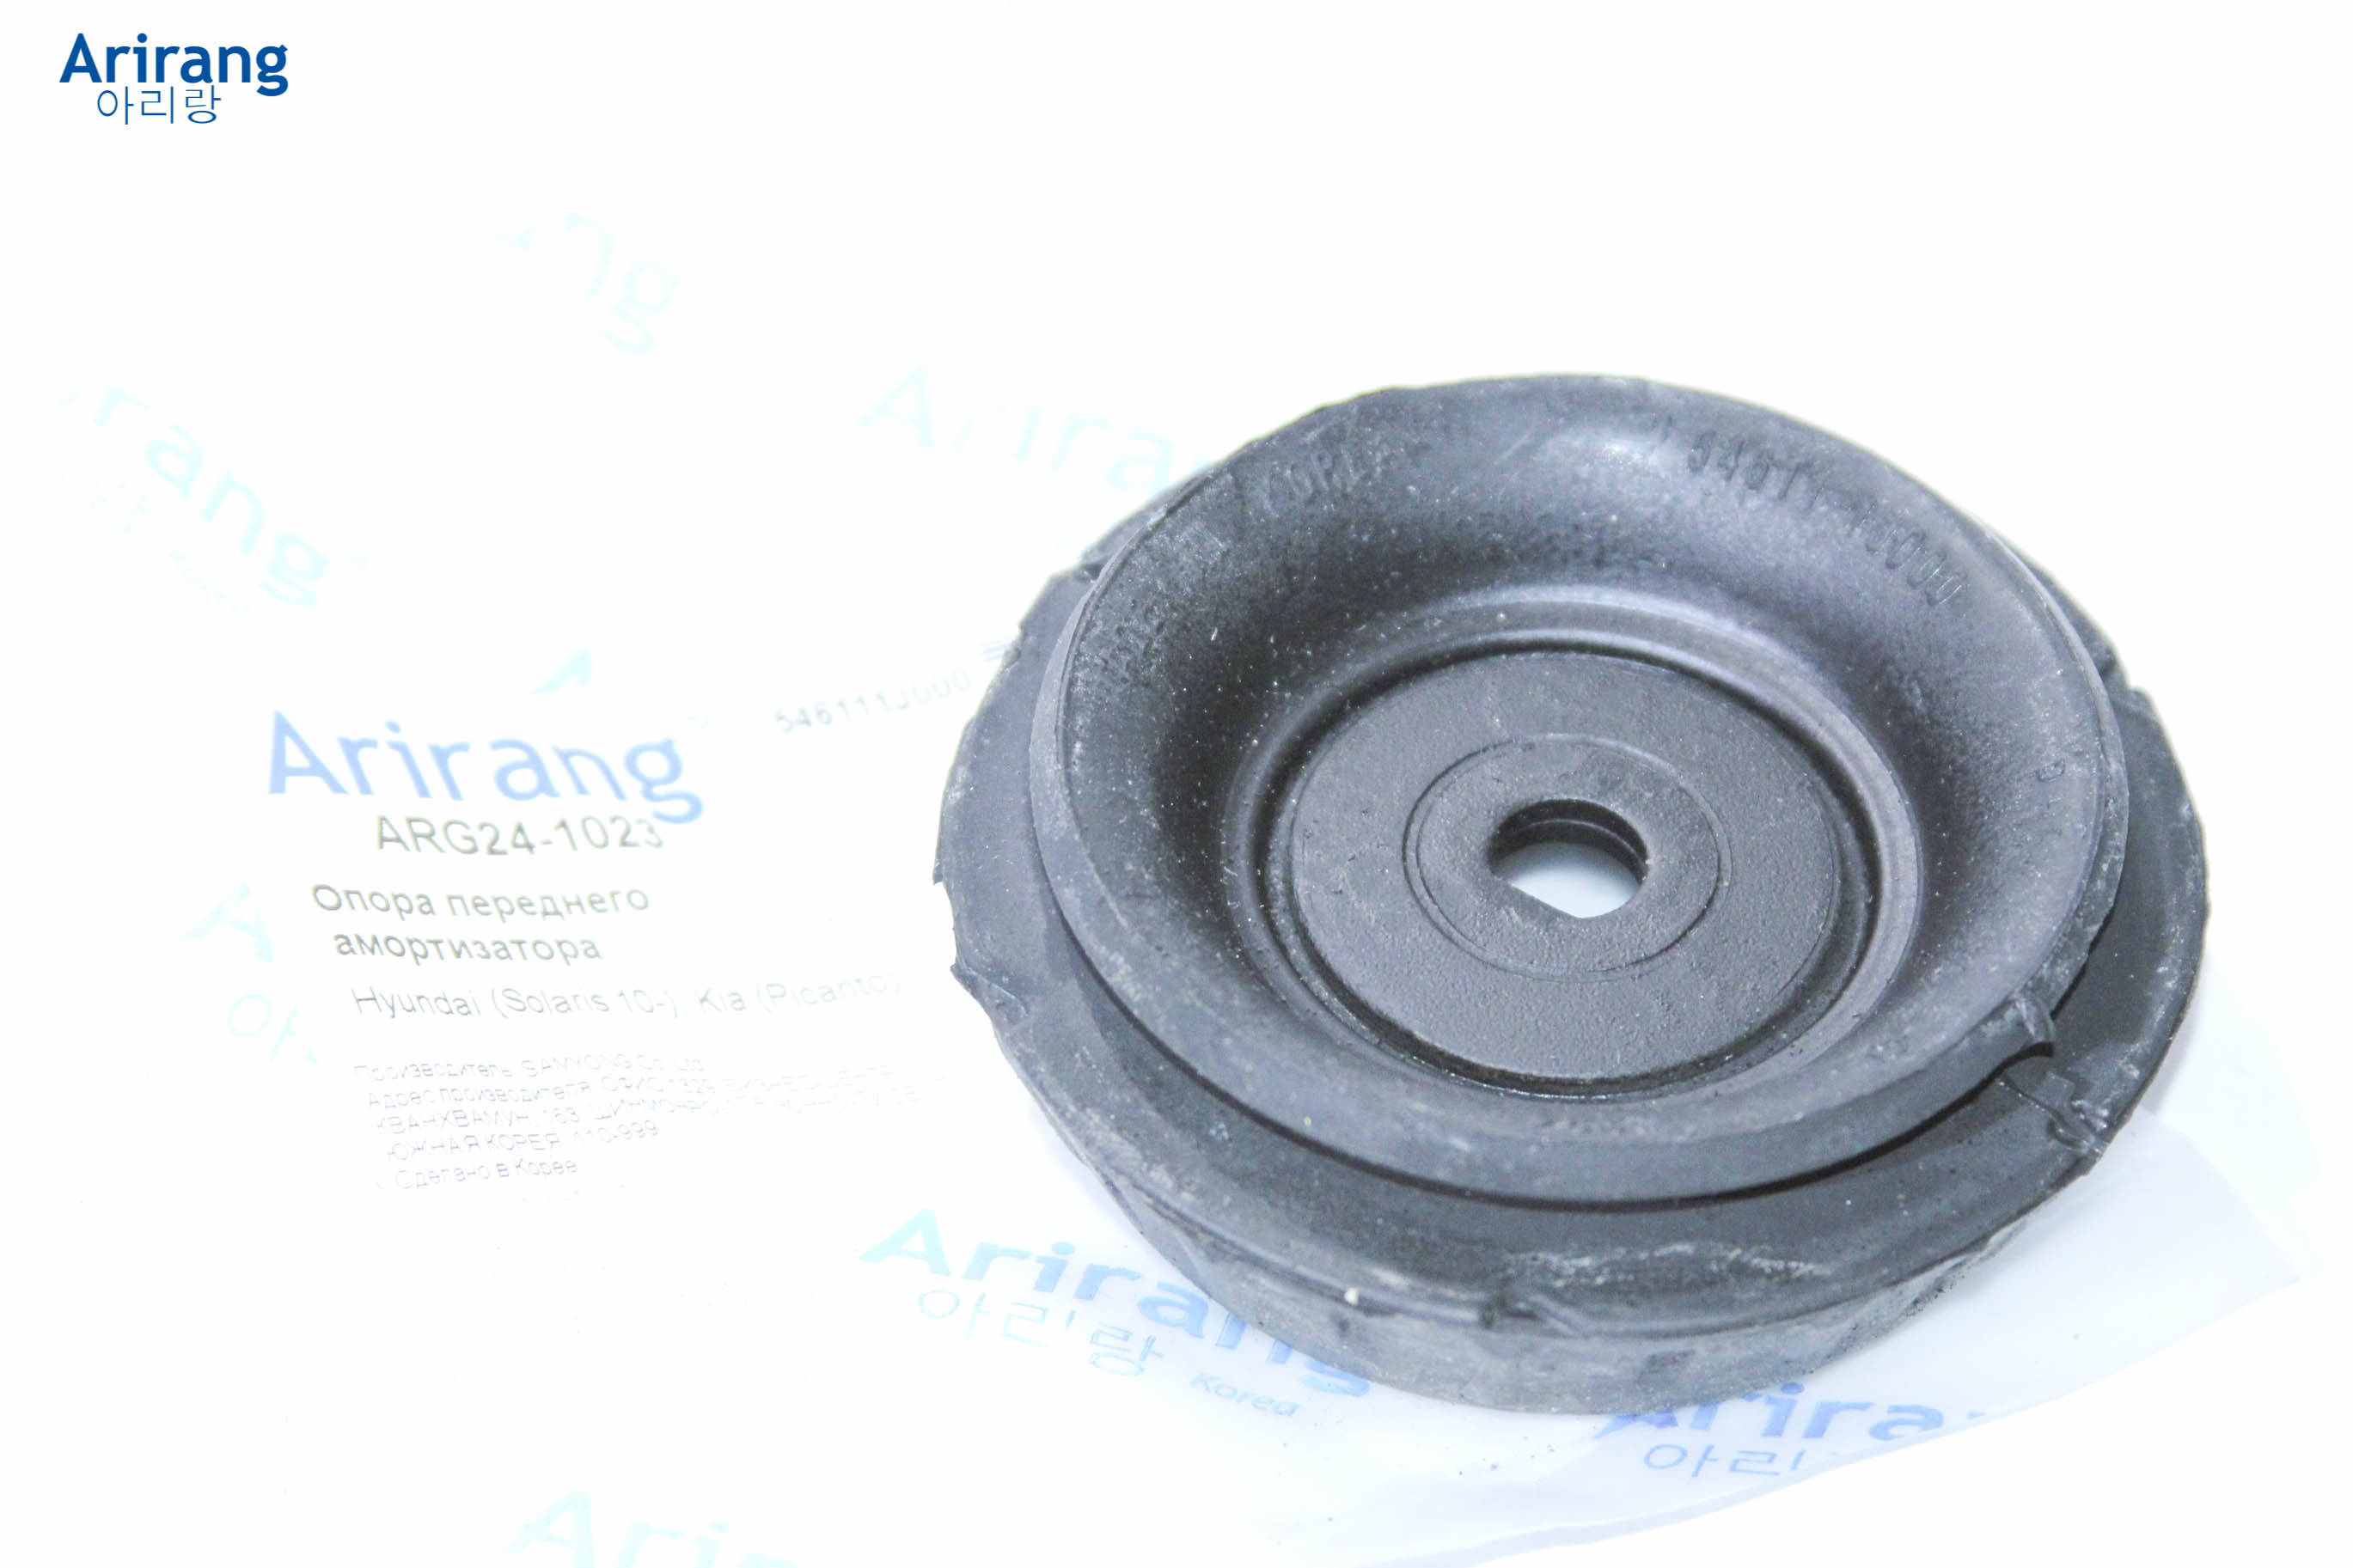 Опора переднего амортизатора - Arirang ARG24-1023